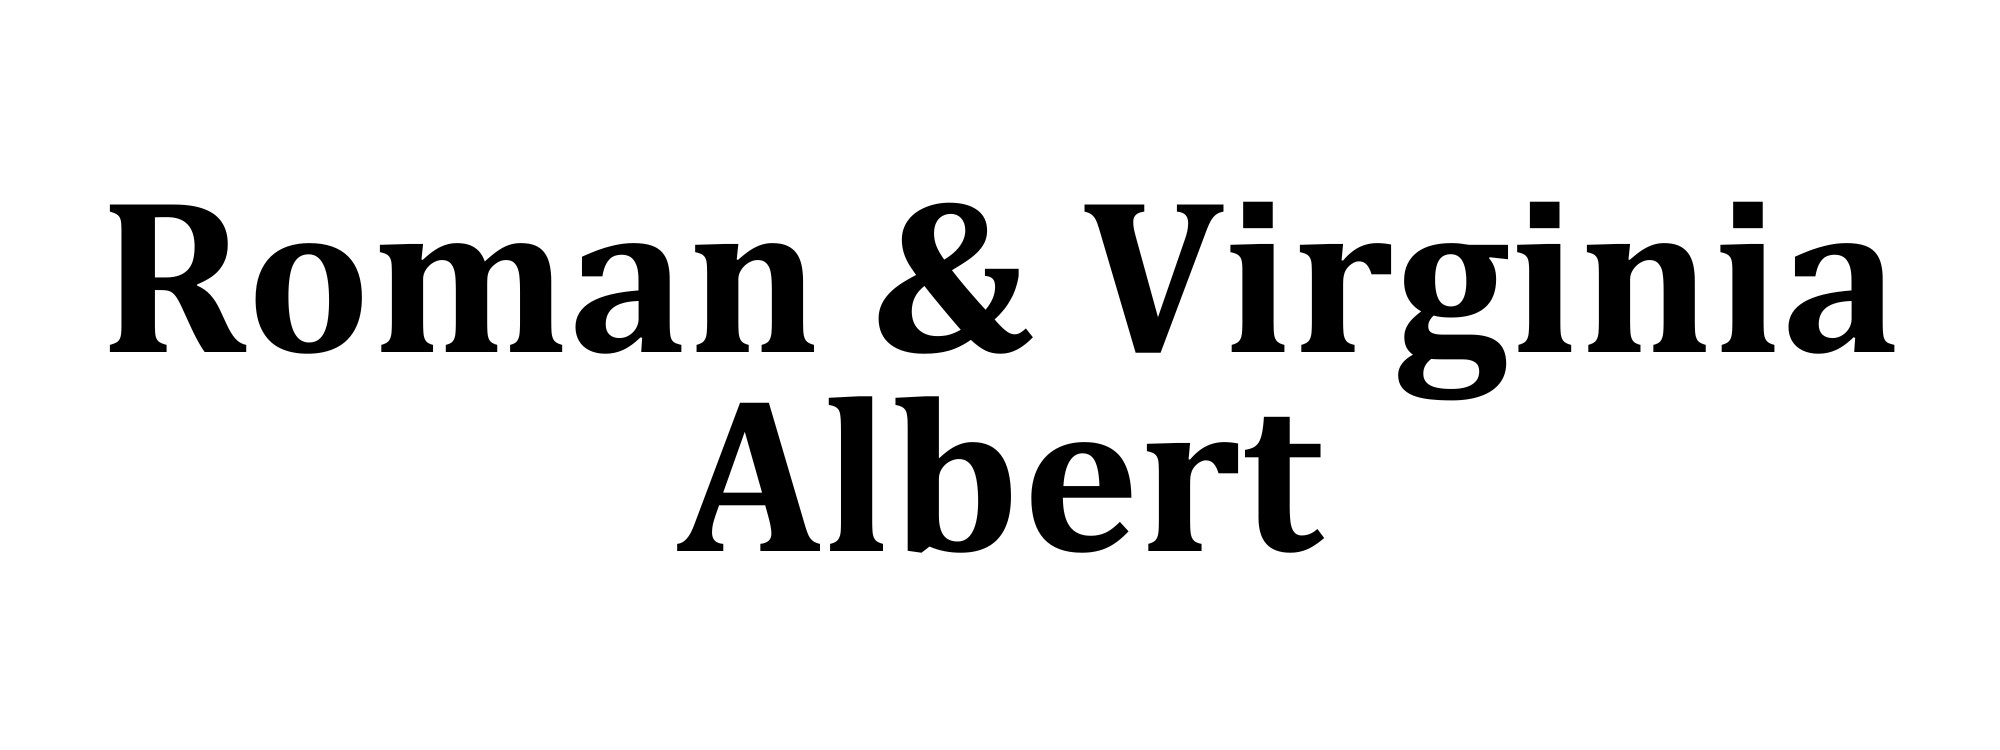 Virginia and Roman Albert logo.png